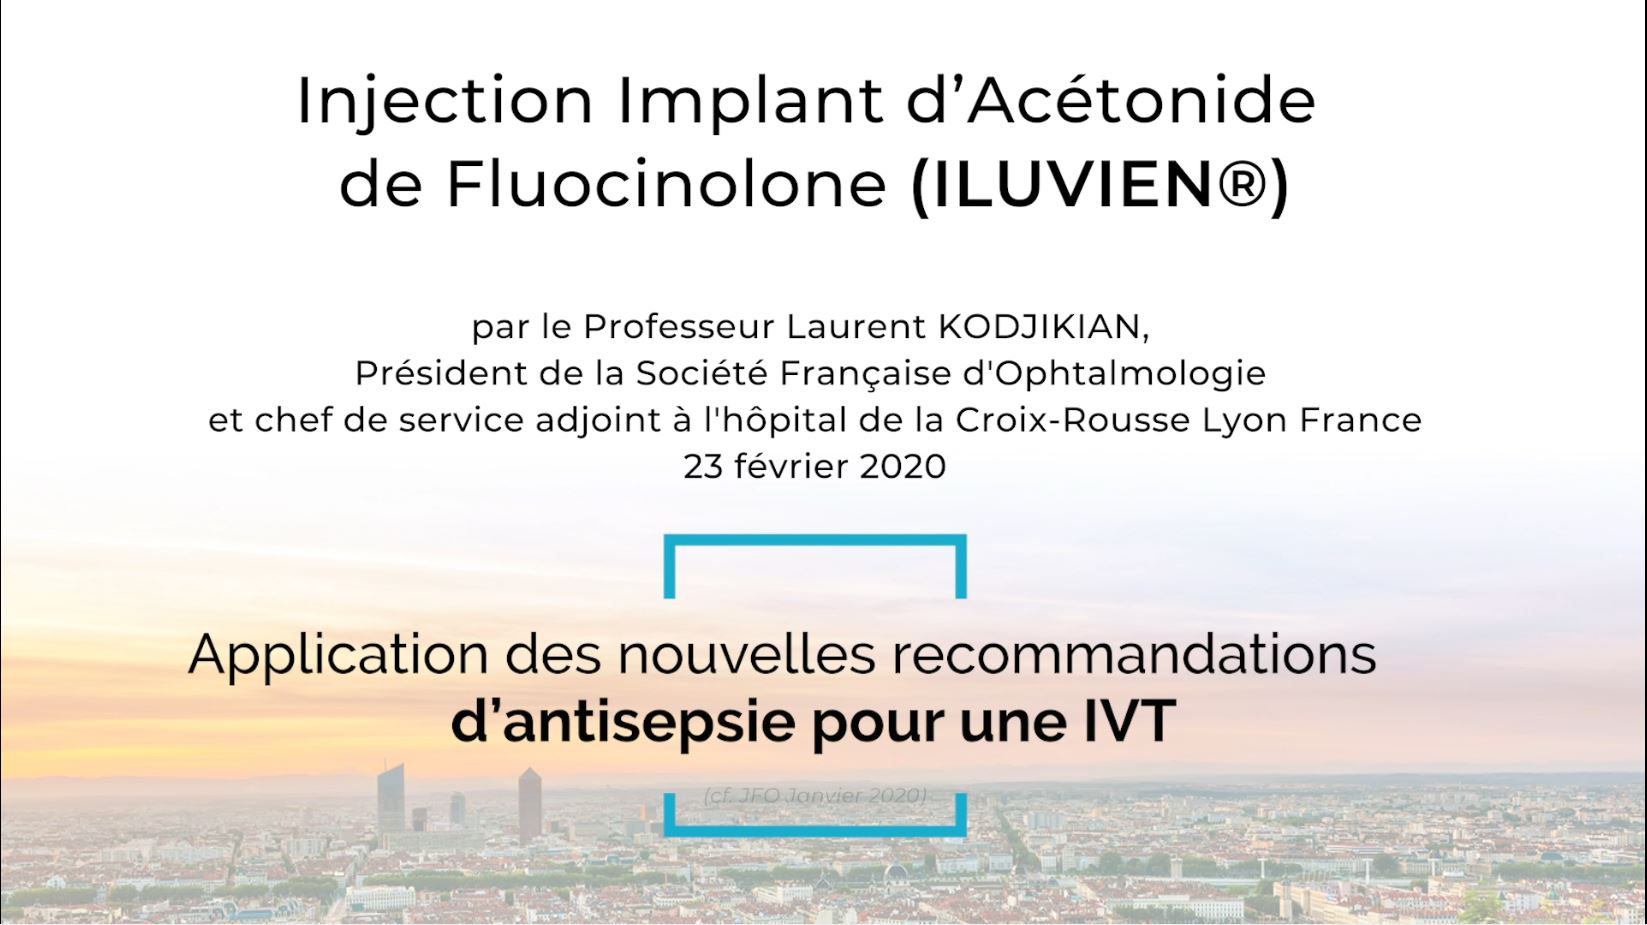 Injection implant acétonide de Fluocinolone